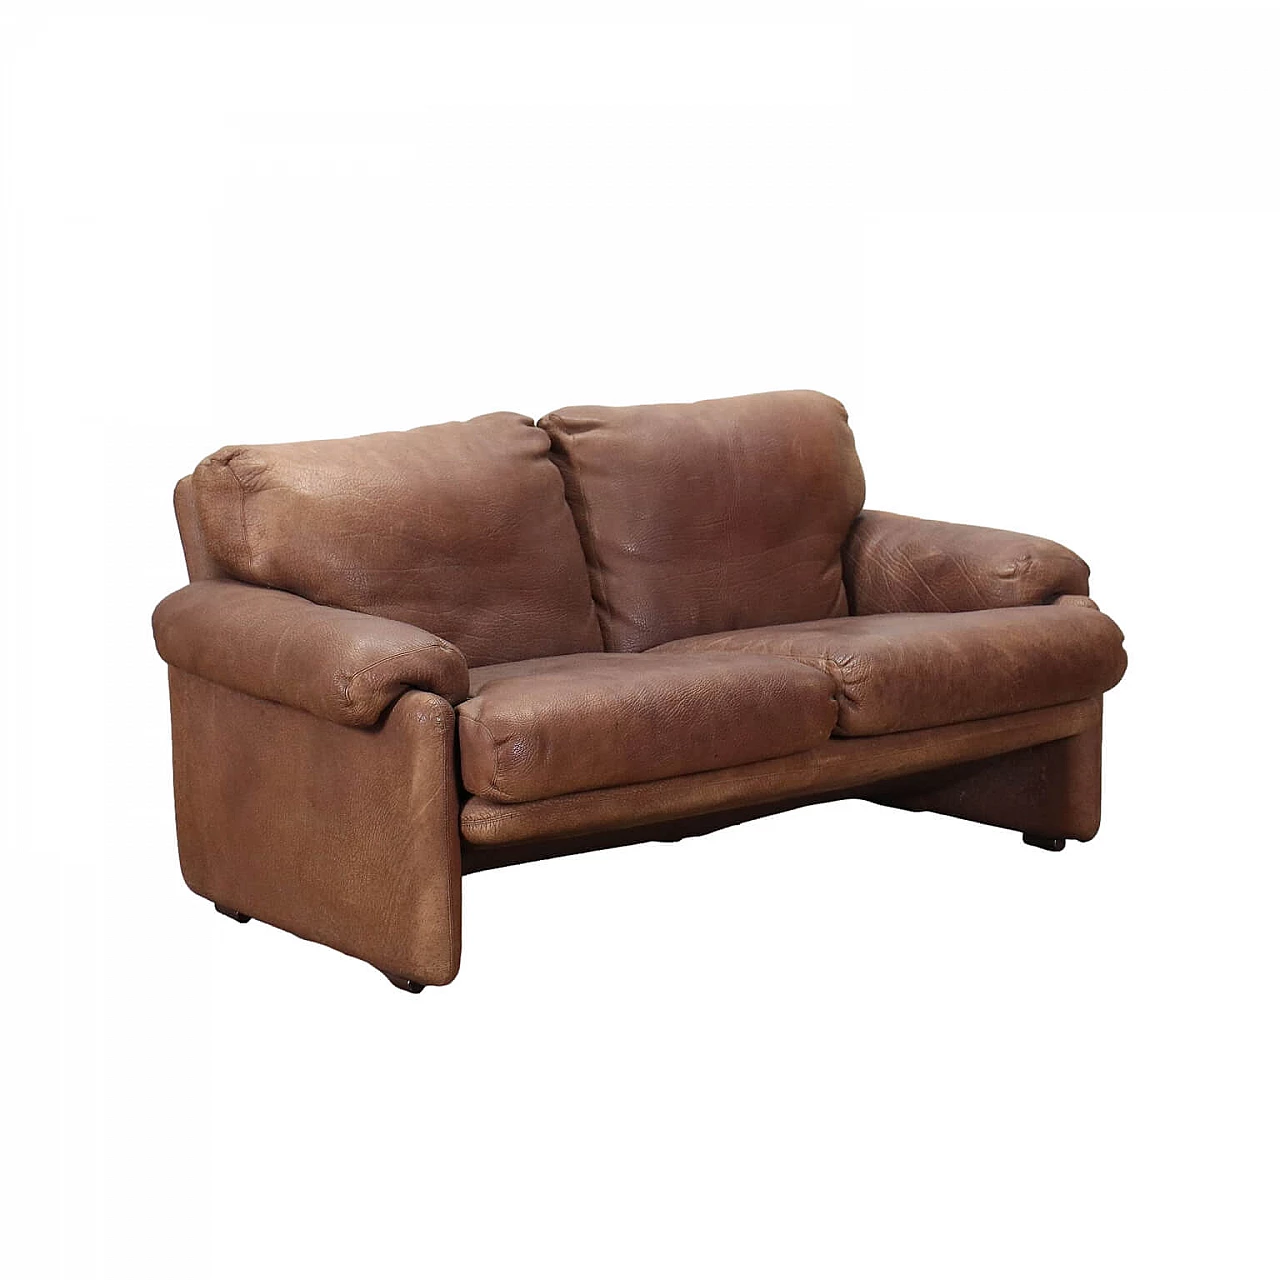 Coronado leather sofa by Tobia Scarpa for B&B, 1970s 1